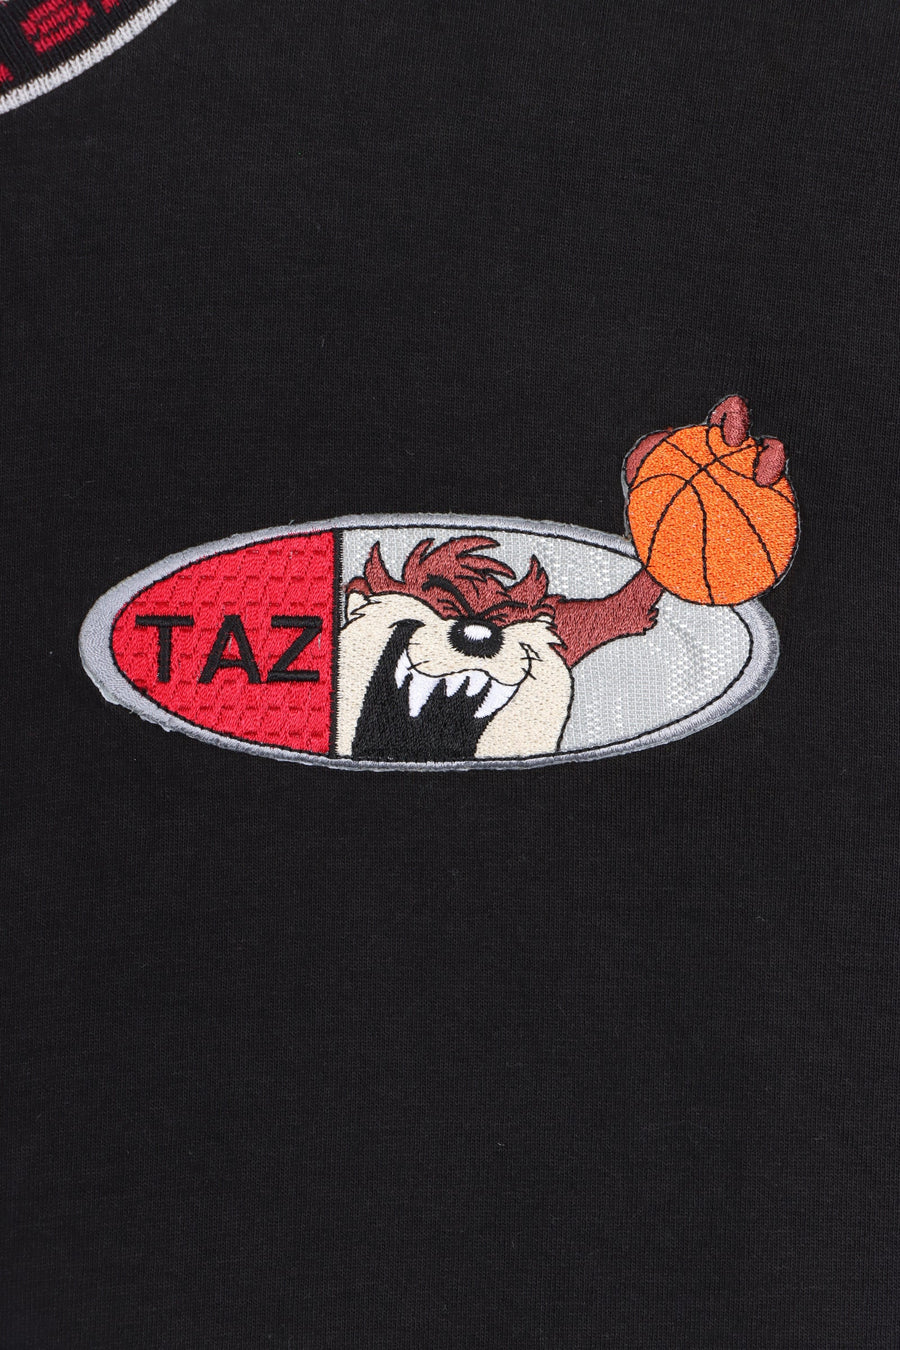 WARNER BROS Taz Sport 1997 Basketball Single Stitch Tee (L-XL)